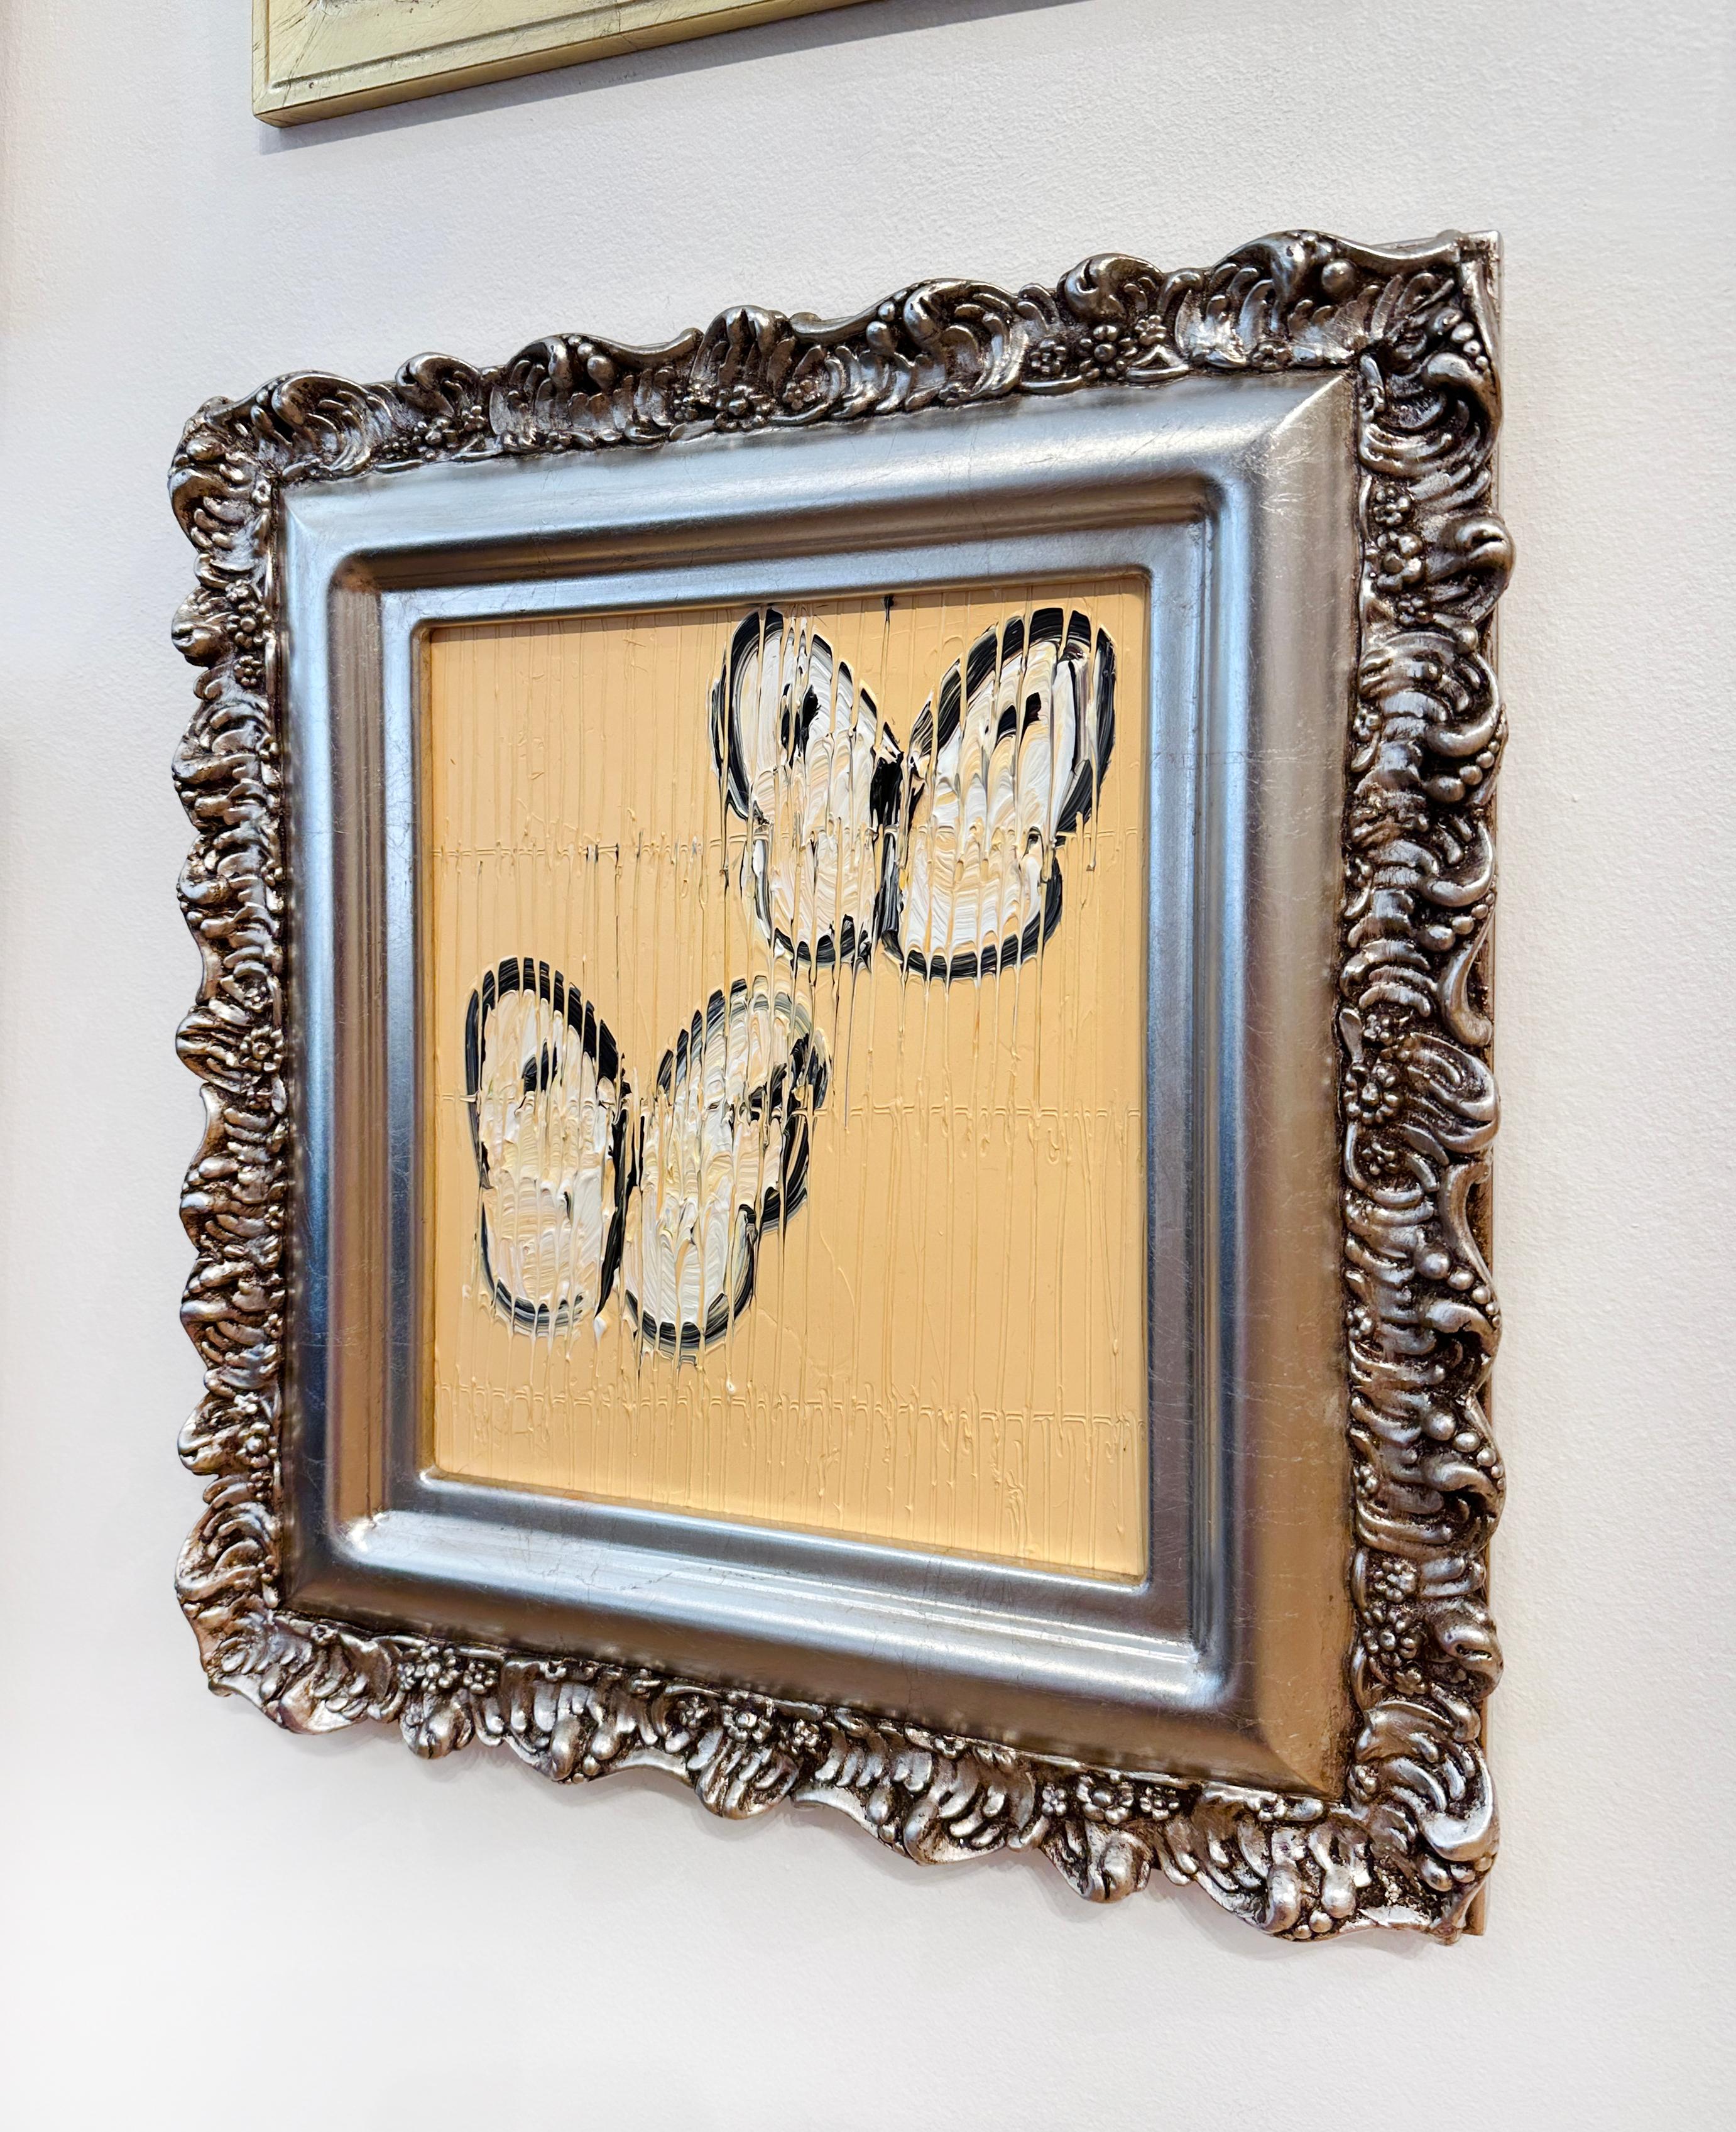 Artist:  Slonem, Hunt
Title:  Field Flutter
Series:  Butterflies
Date:  2022
Medium:  Oil on wood
Unframed Dimensions:  10